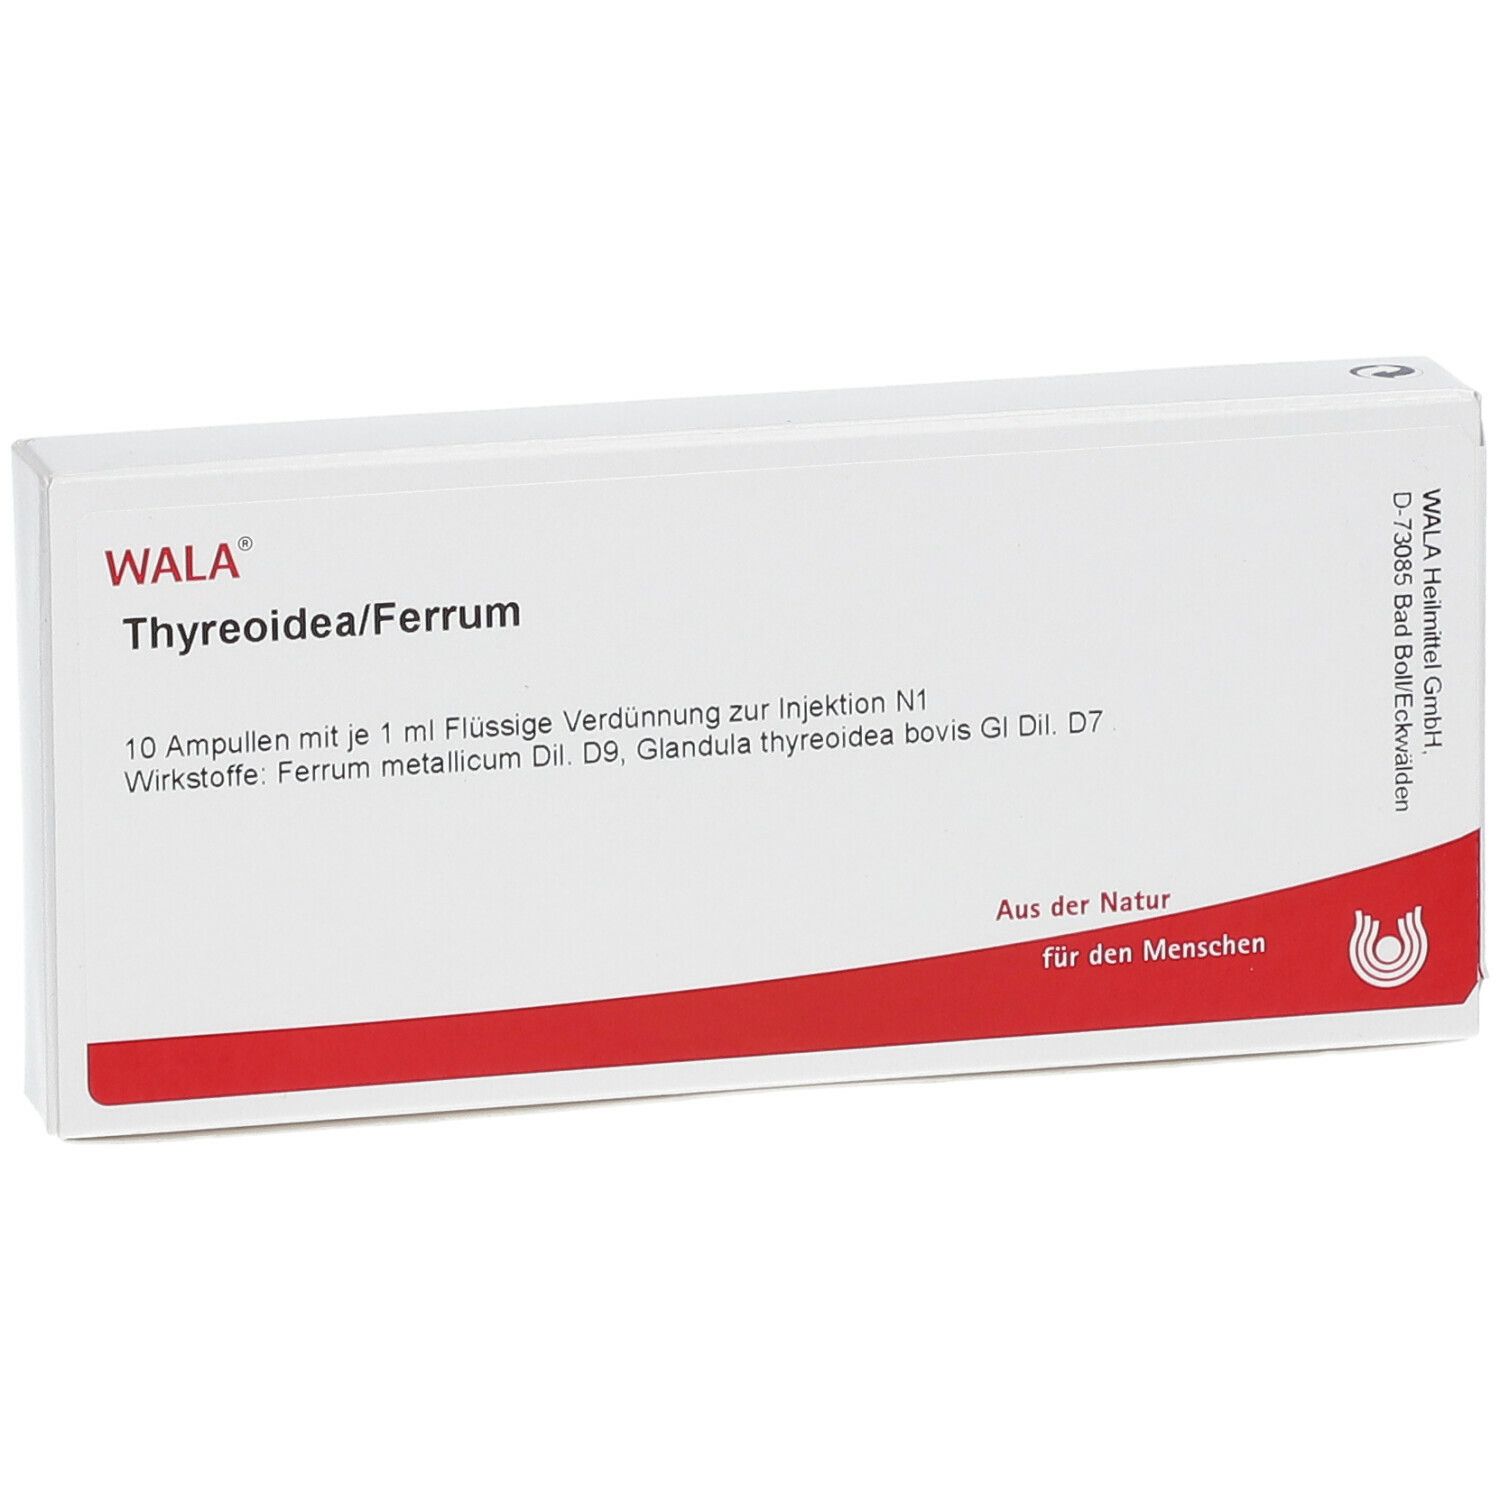 WALA® Thyreoidea Ferrum Ampullen